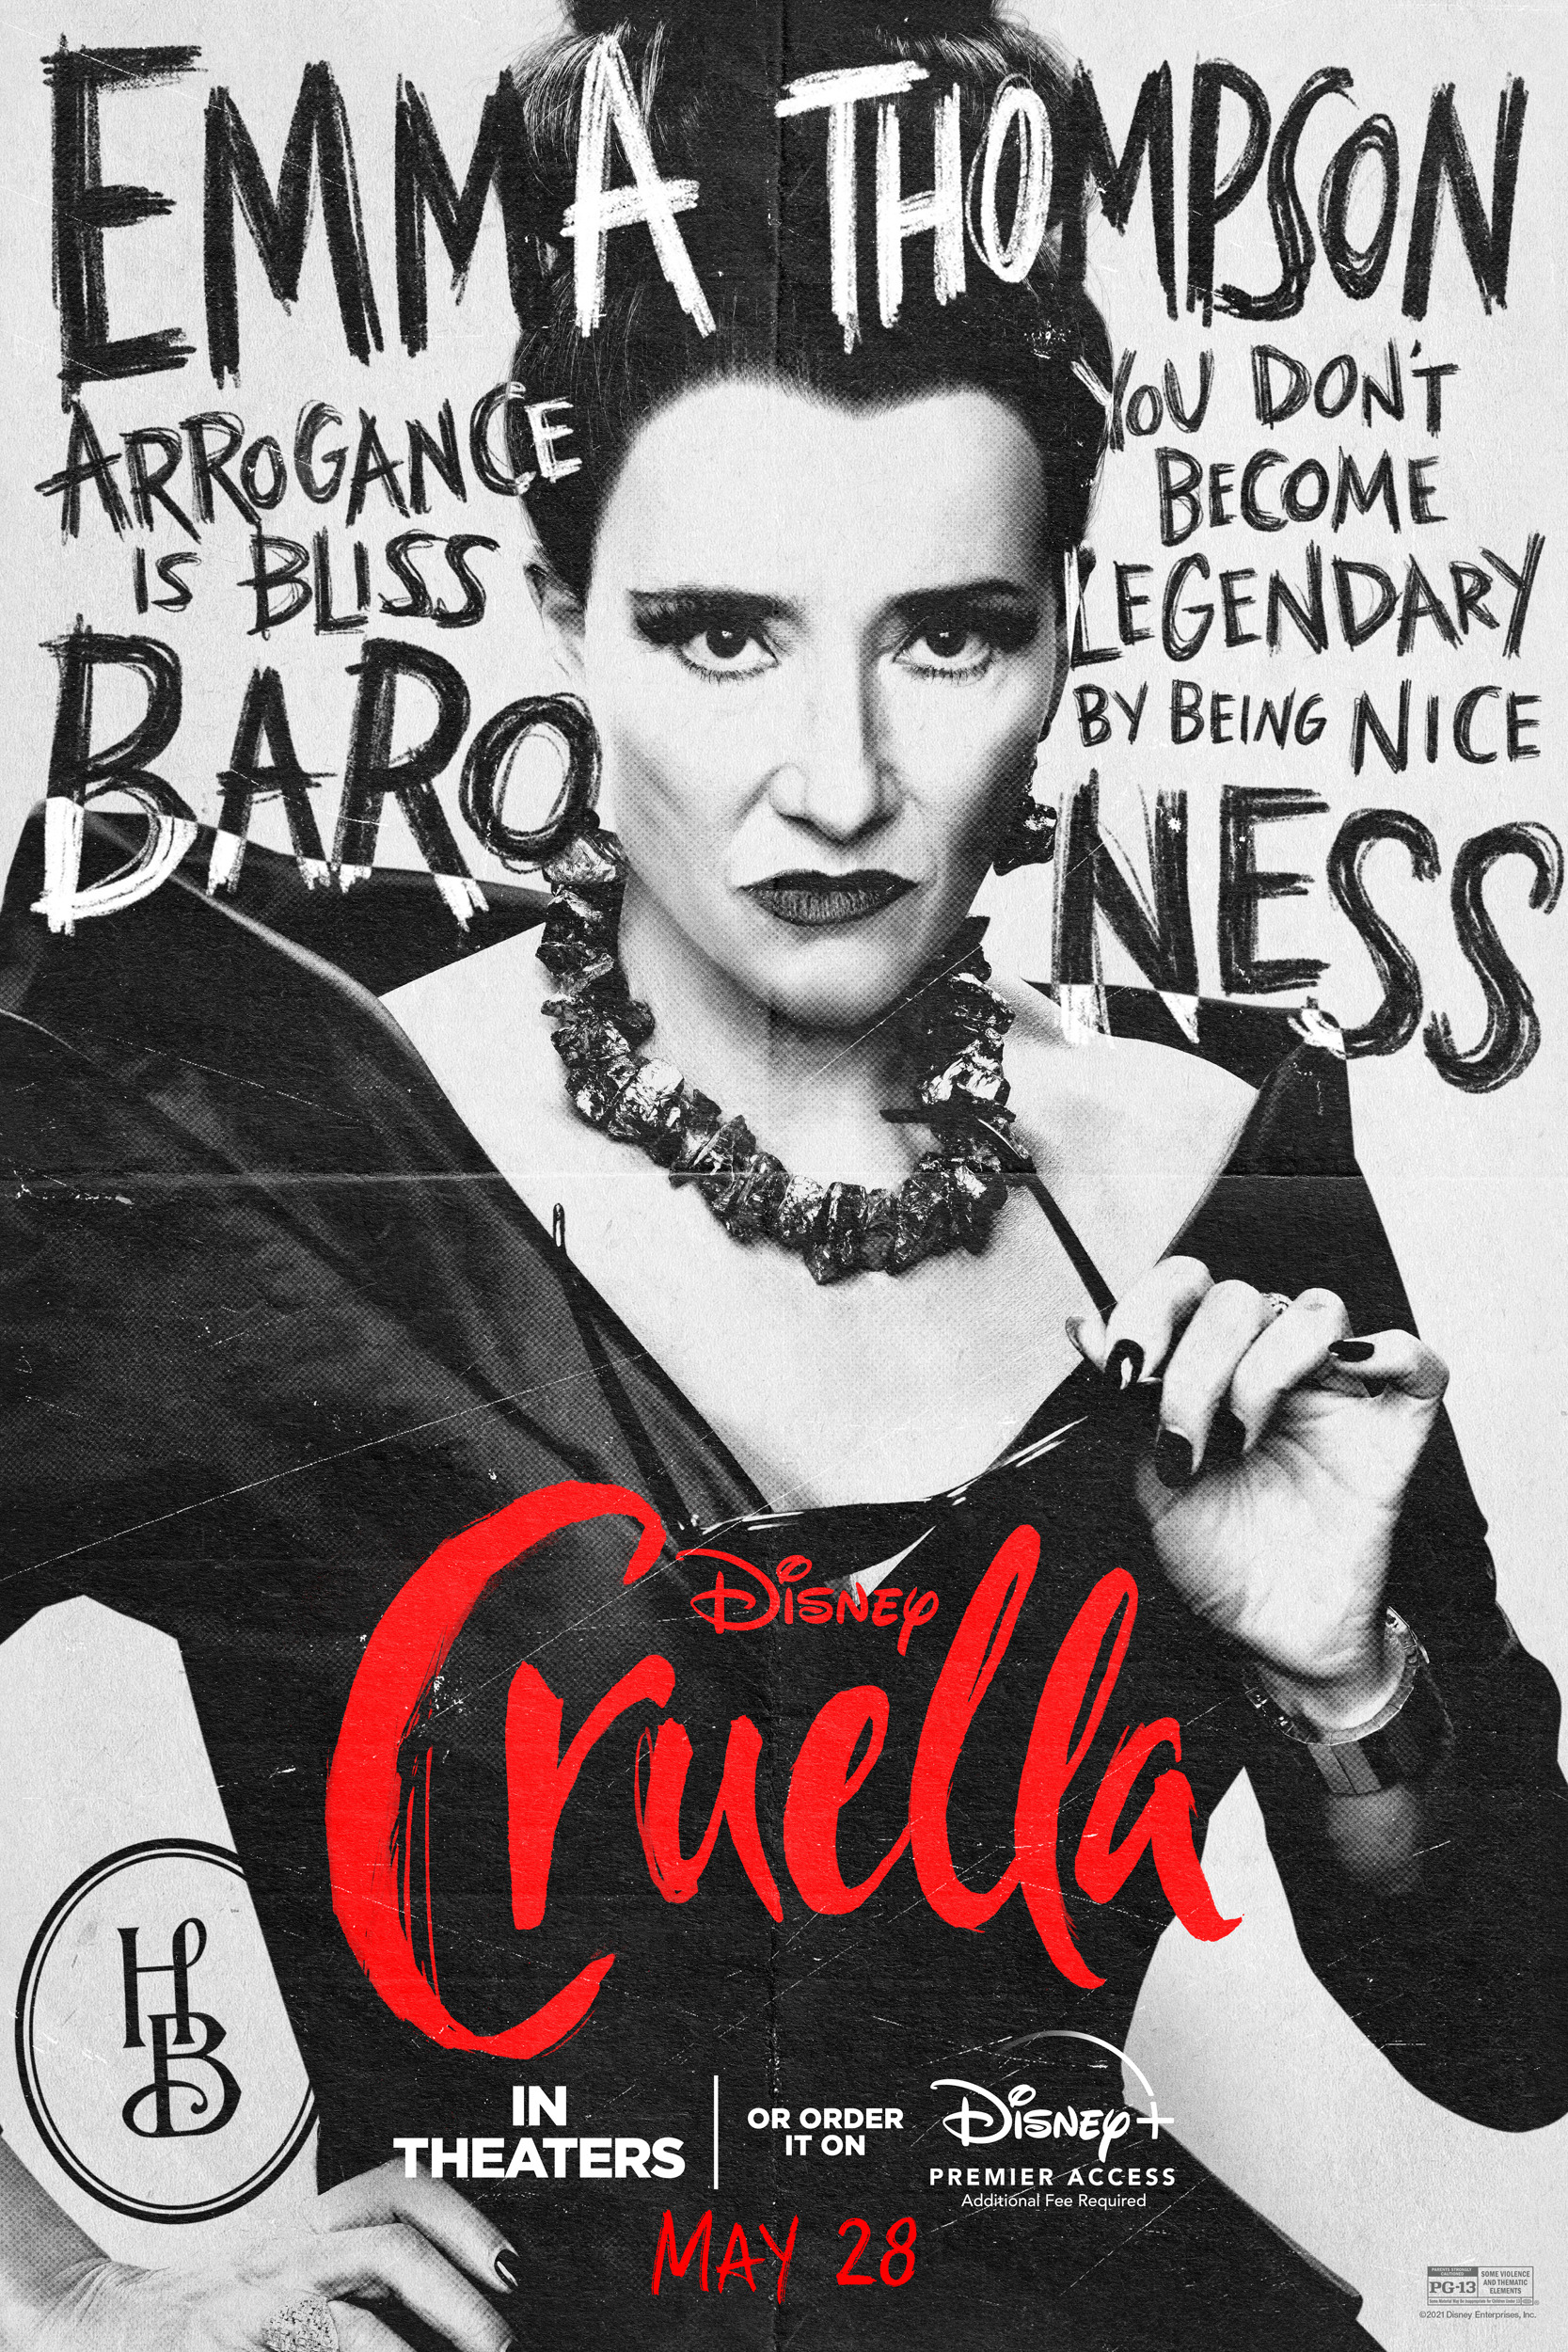 Mega Sized Movie Poster Image for Cruella (#5 of 14)